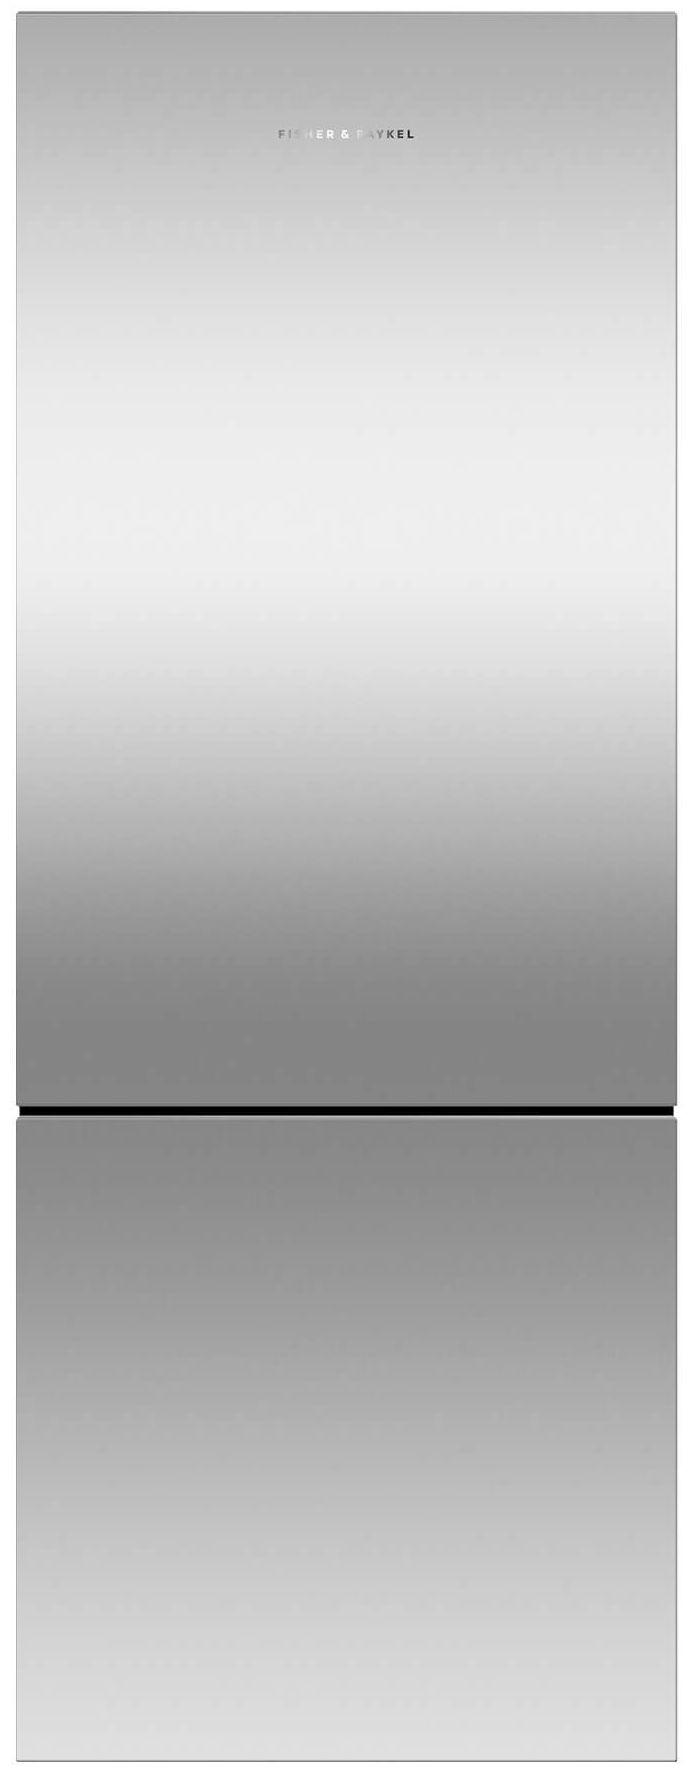 Fisher & Paykel Series 5 13.4 Cu. Ft. Stainless Steel Counter Depth Bottom Freezer Refrigerator